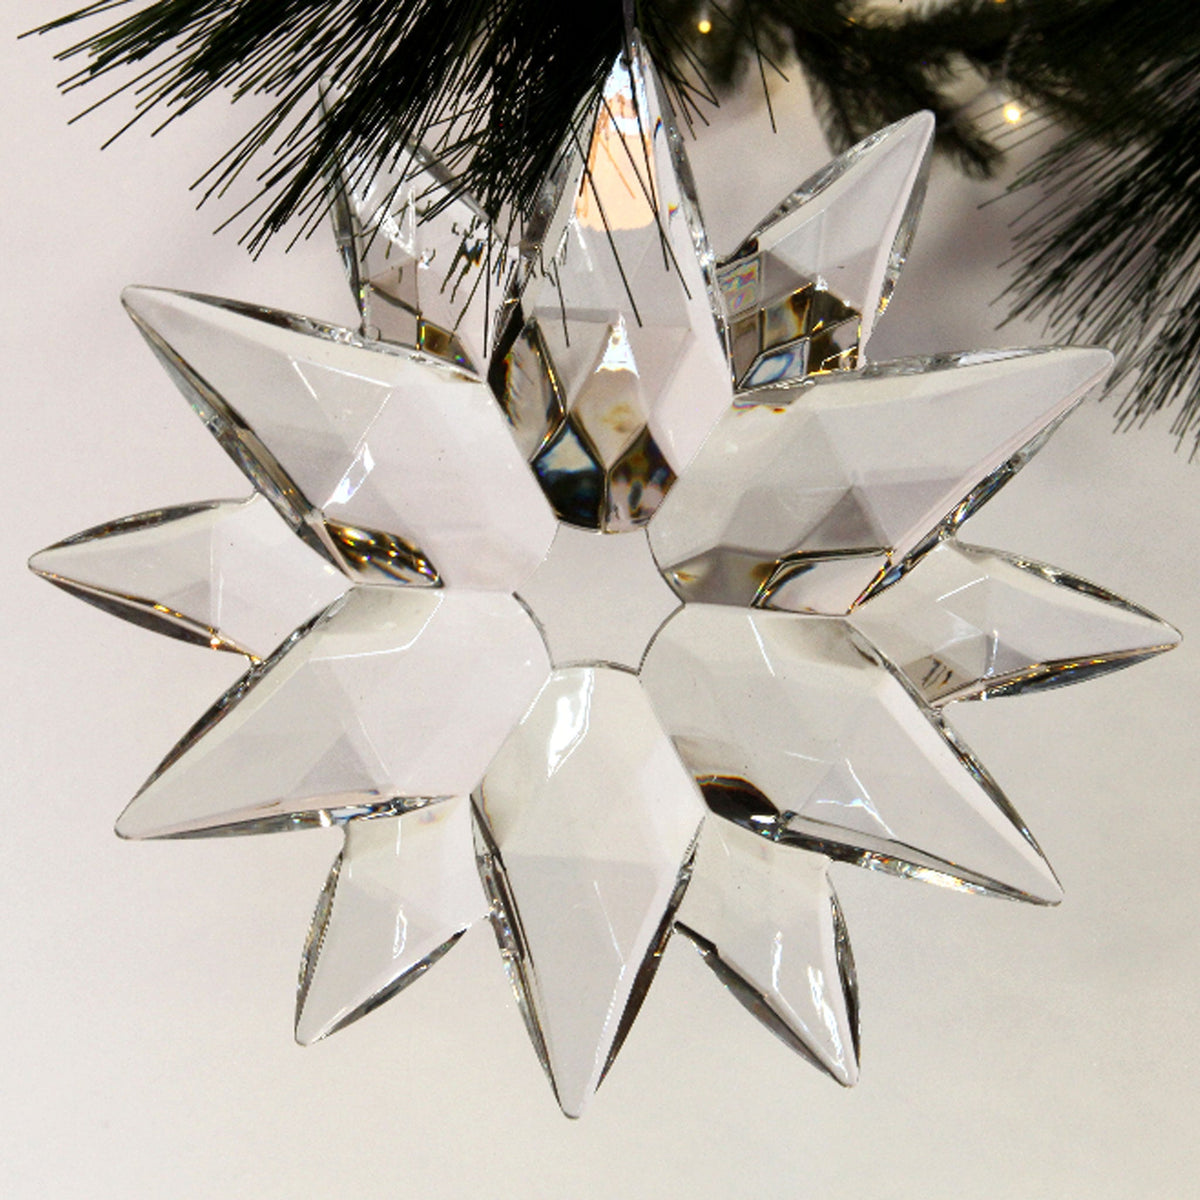 Acrylic Snowflake Decorations